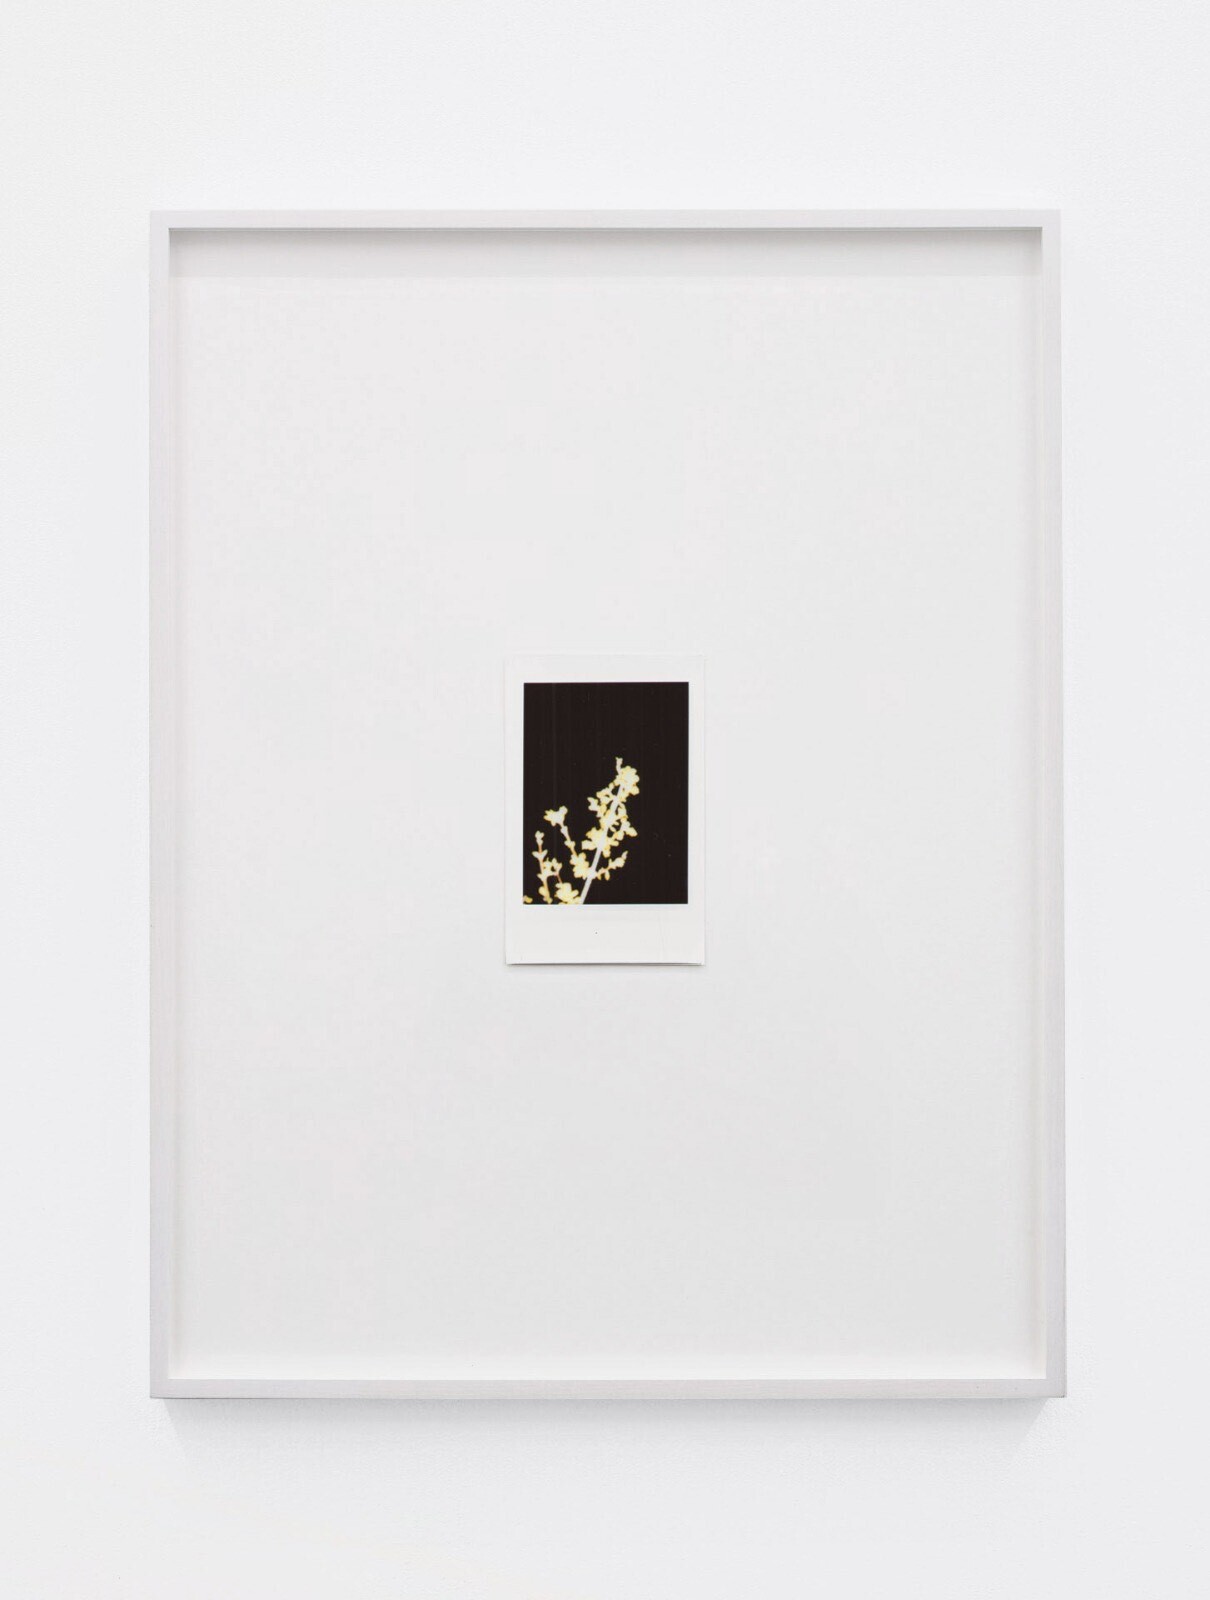 Antoine Duchenet, Untitled (2) (Instax series), 2020-21, Fujifilm Instax Mini, frames (10 x 13 inches)